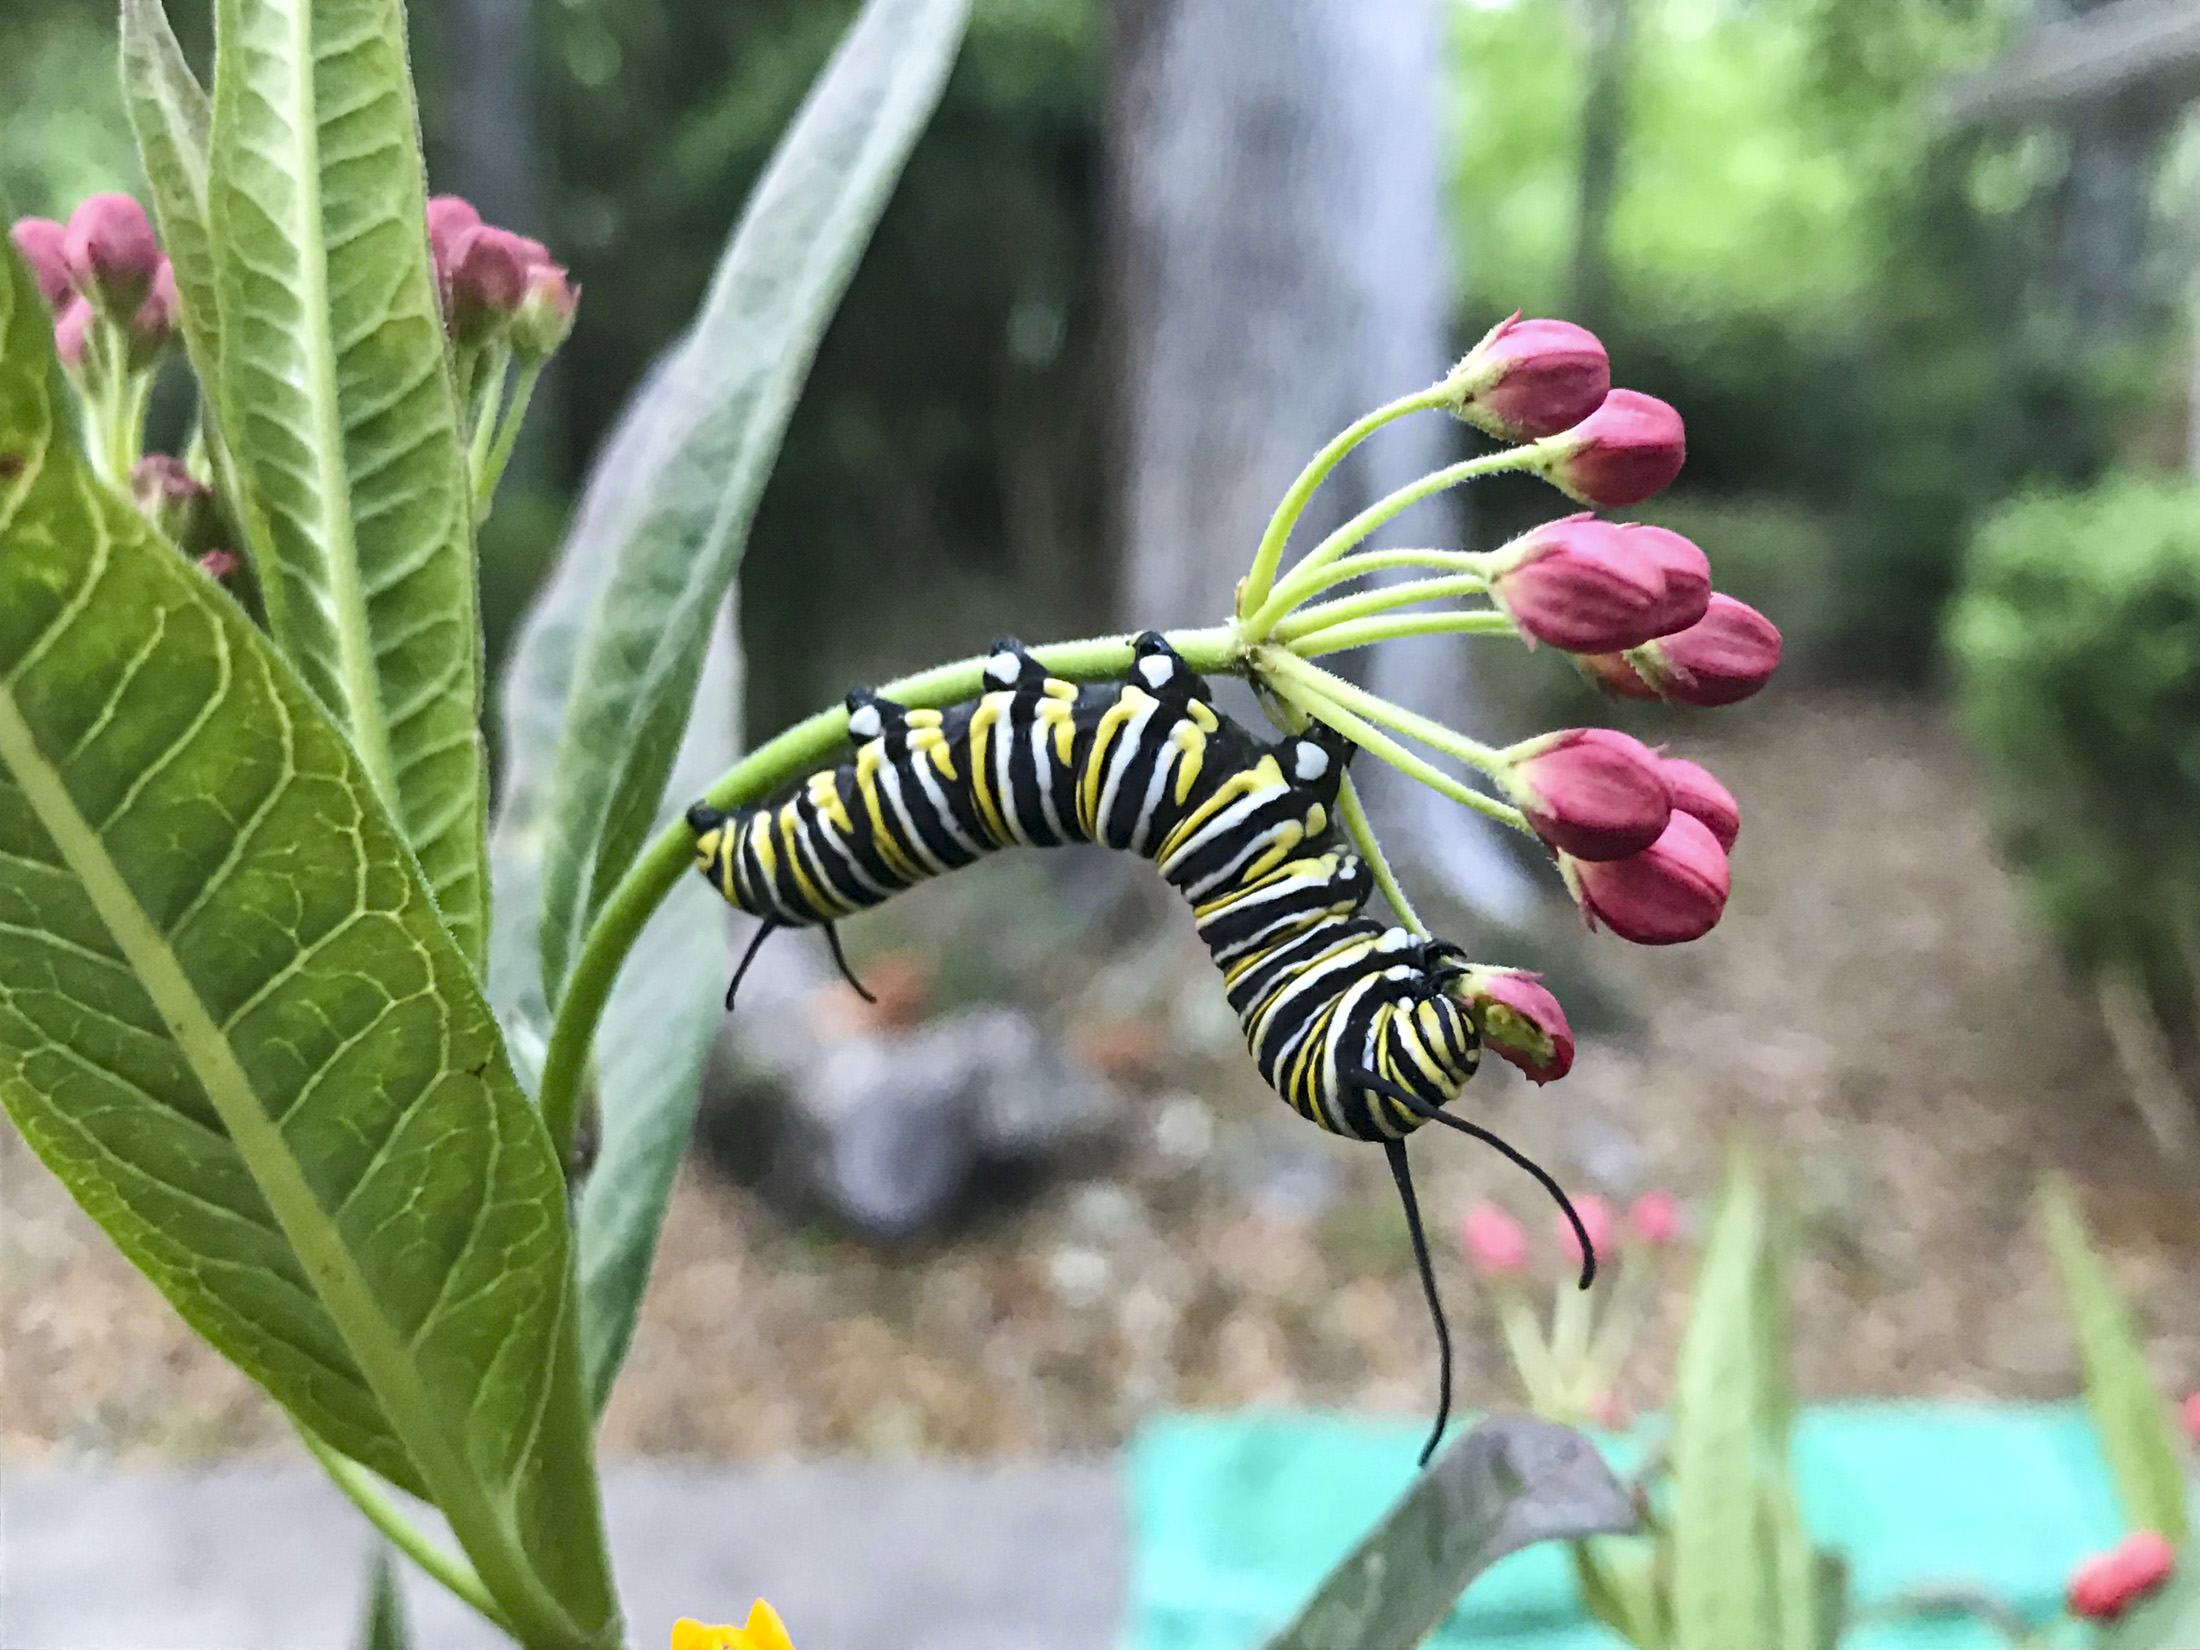 mother-of-monarchs-unexpectedly-rearing-22-caterpillars-florida